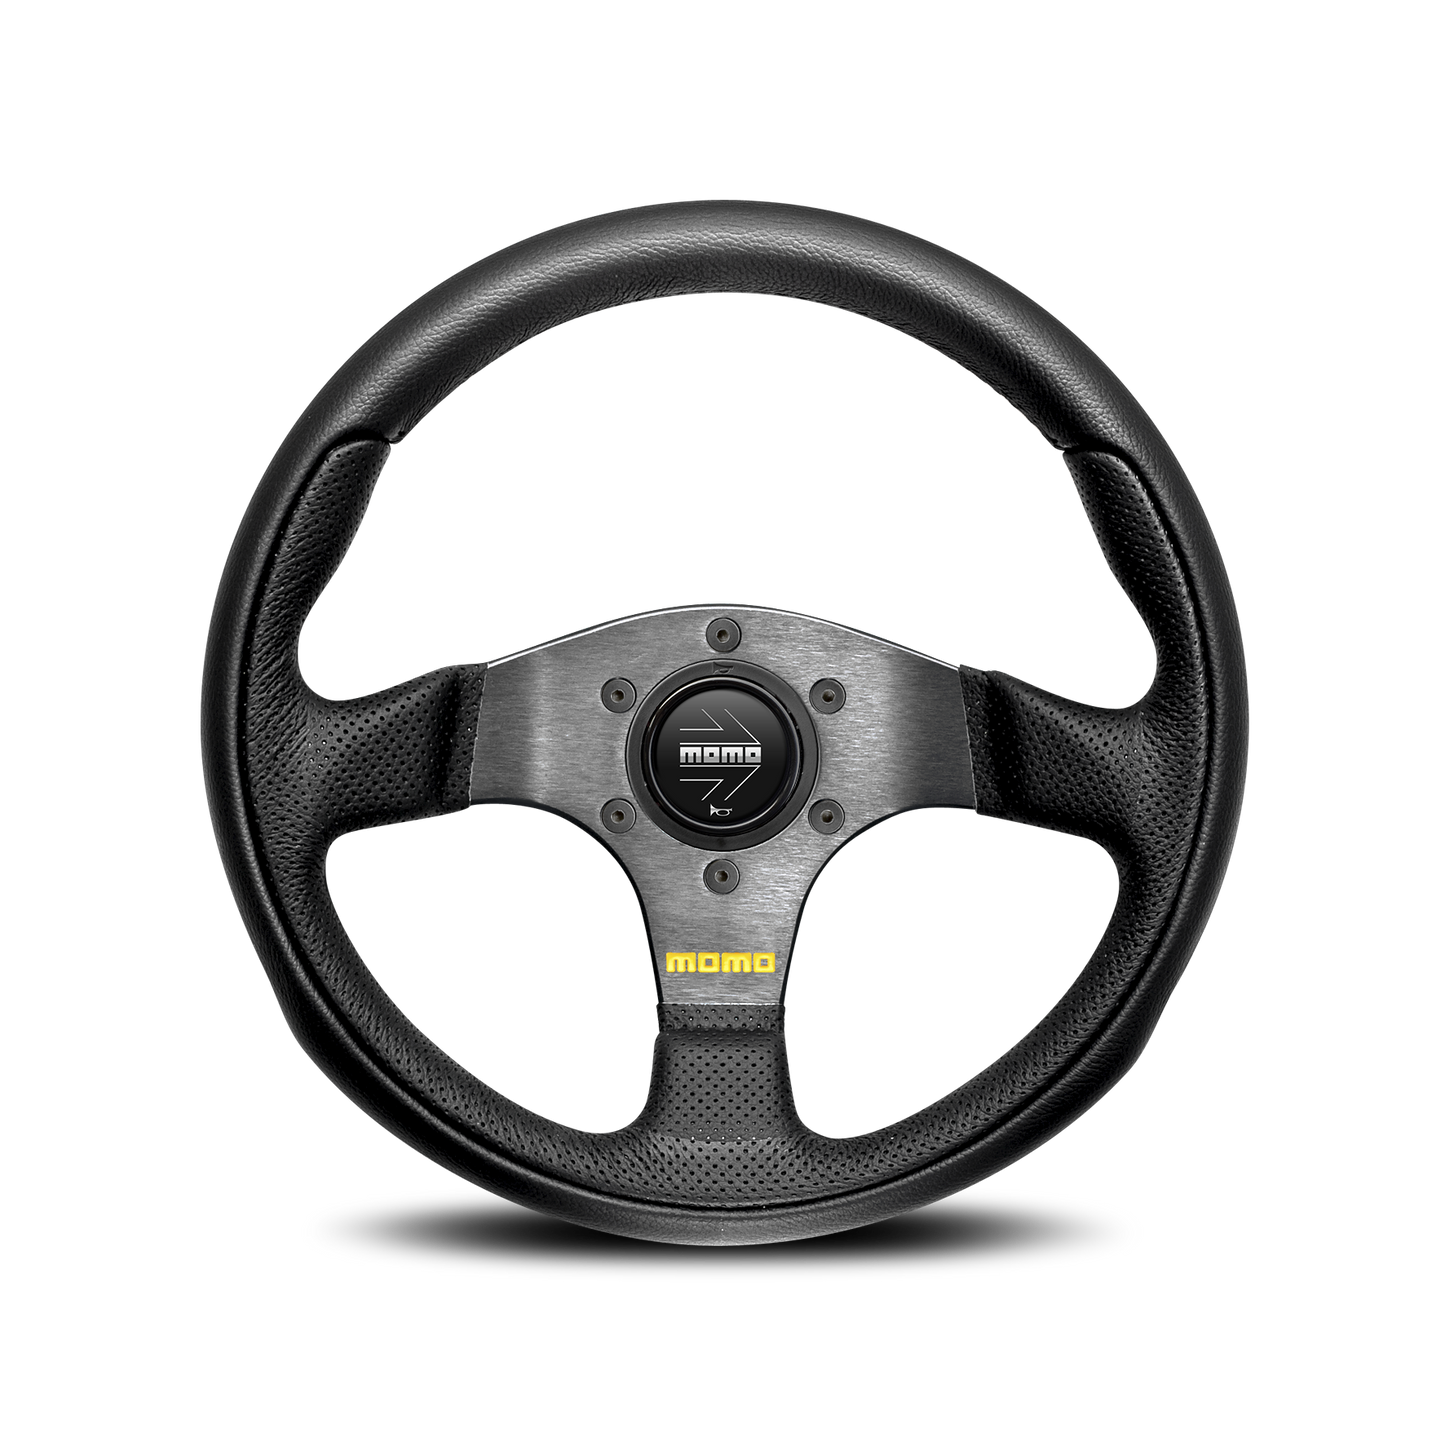 Momo Team Steering Wheel - Black Leather 280mm